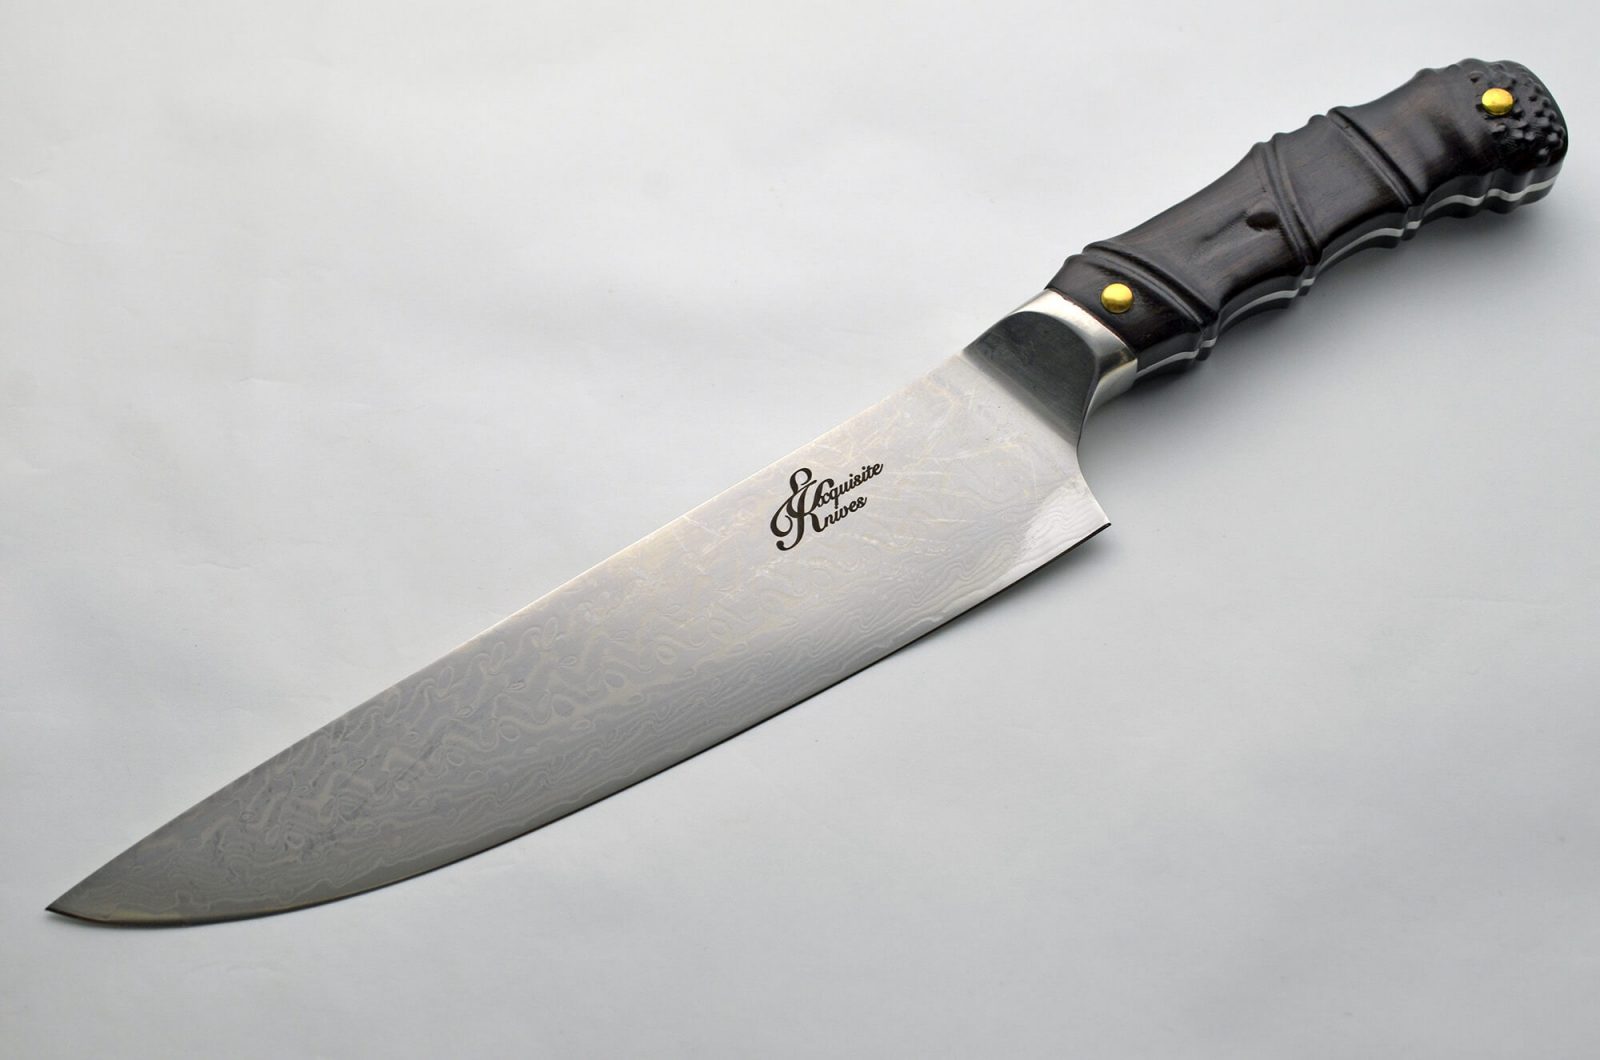 new kitchen knife design